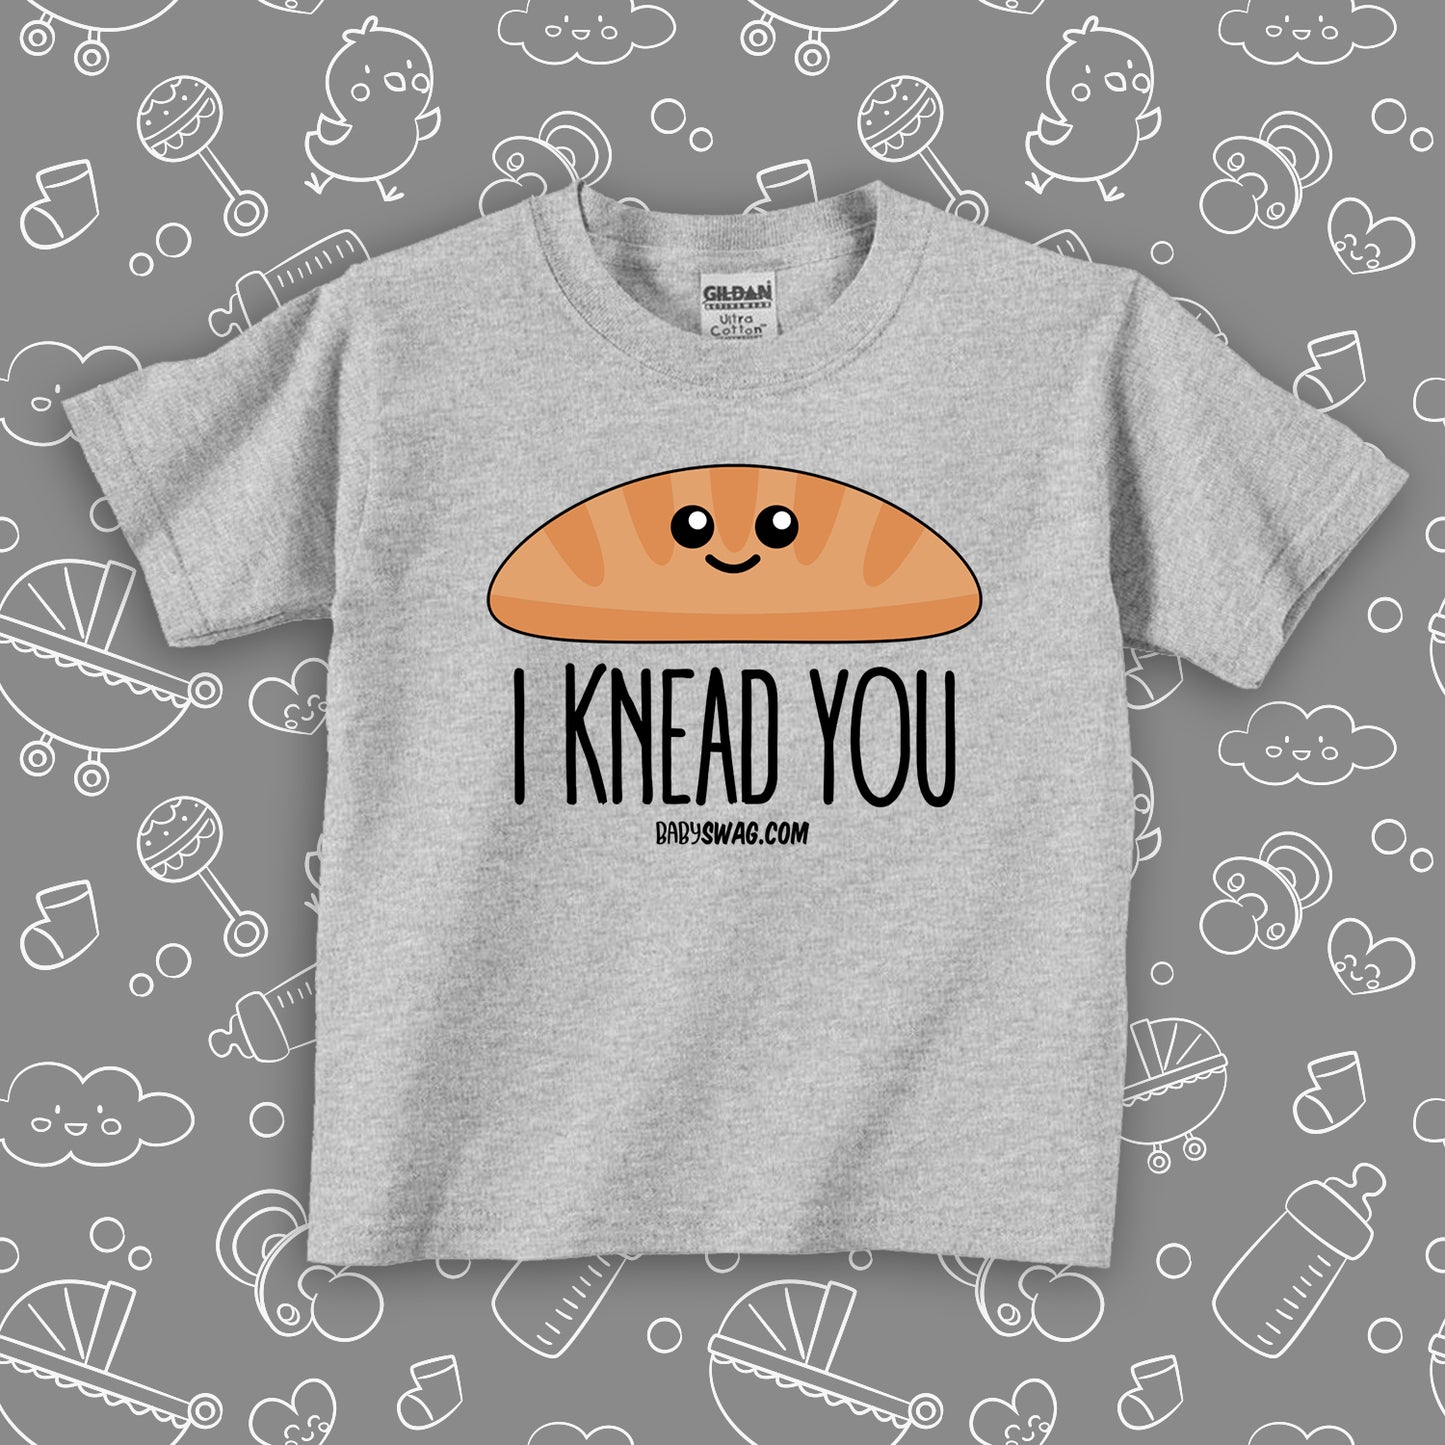 Cool toddler shirt saying "I Knead You", in grey. 